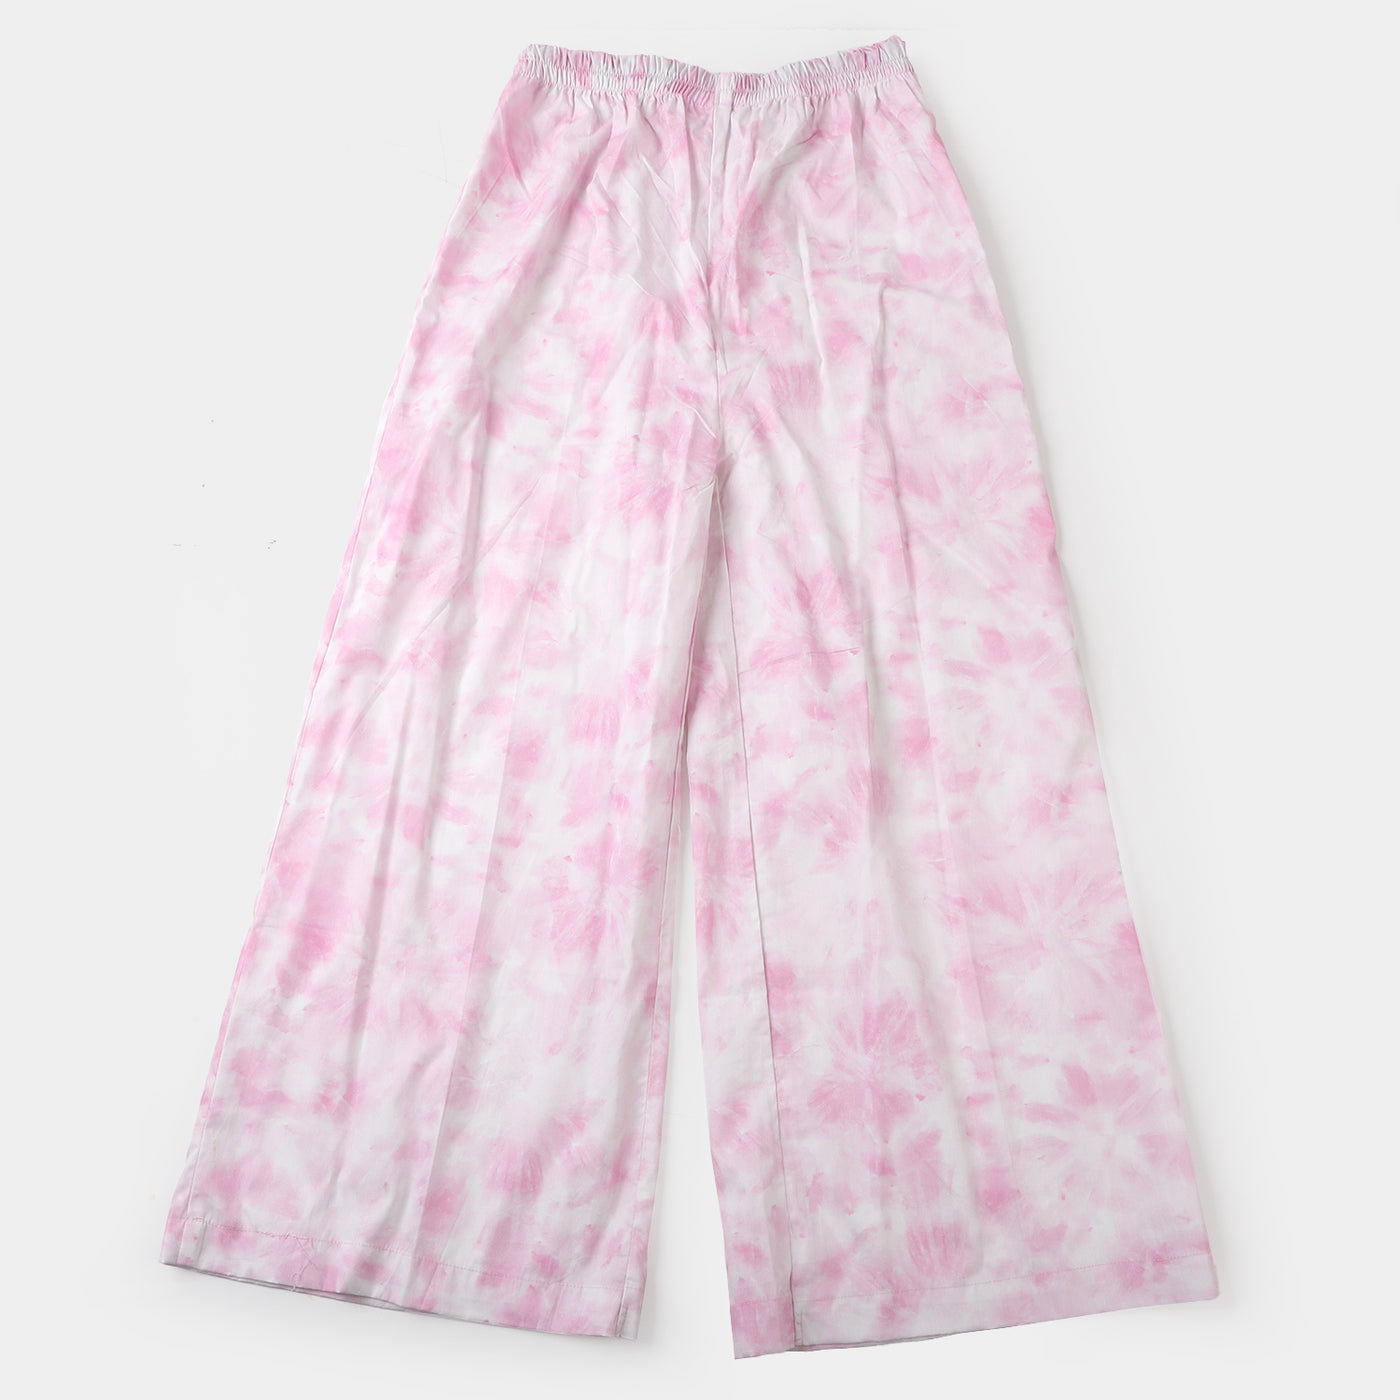 Teens Girls Cotton 2 PCs Suit Set - Pink